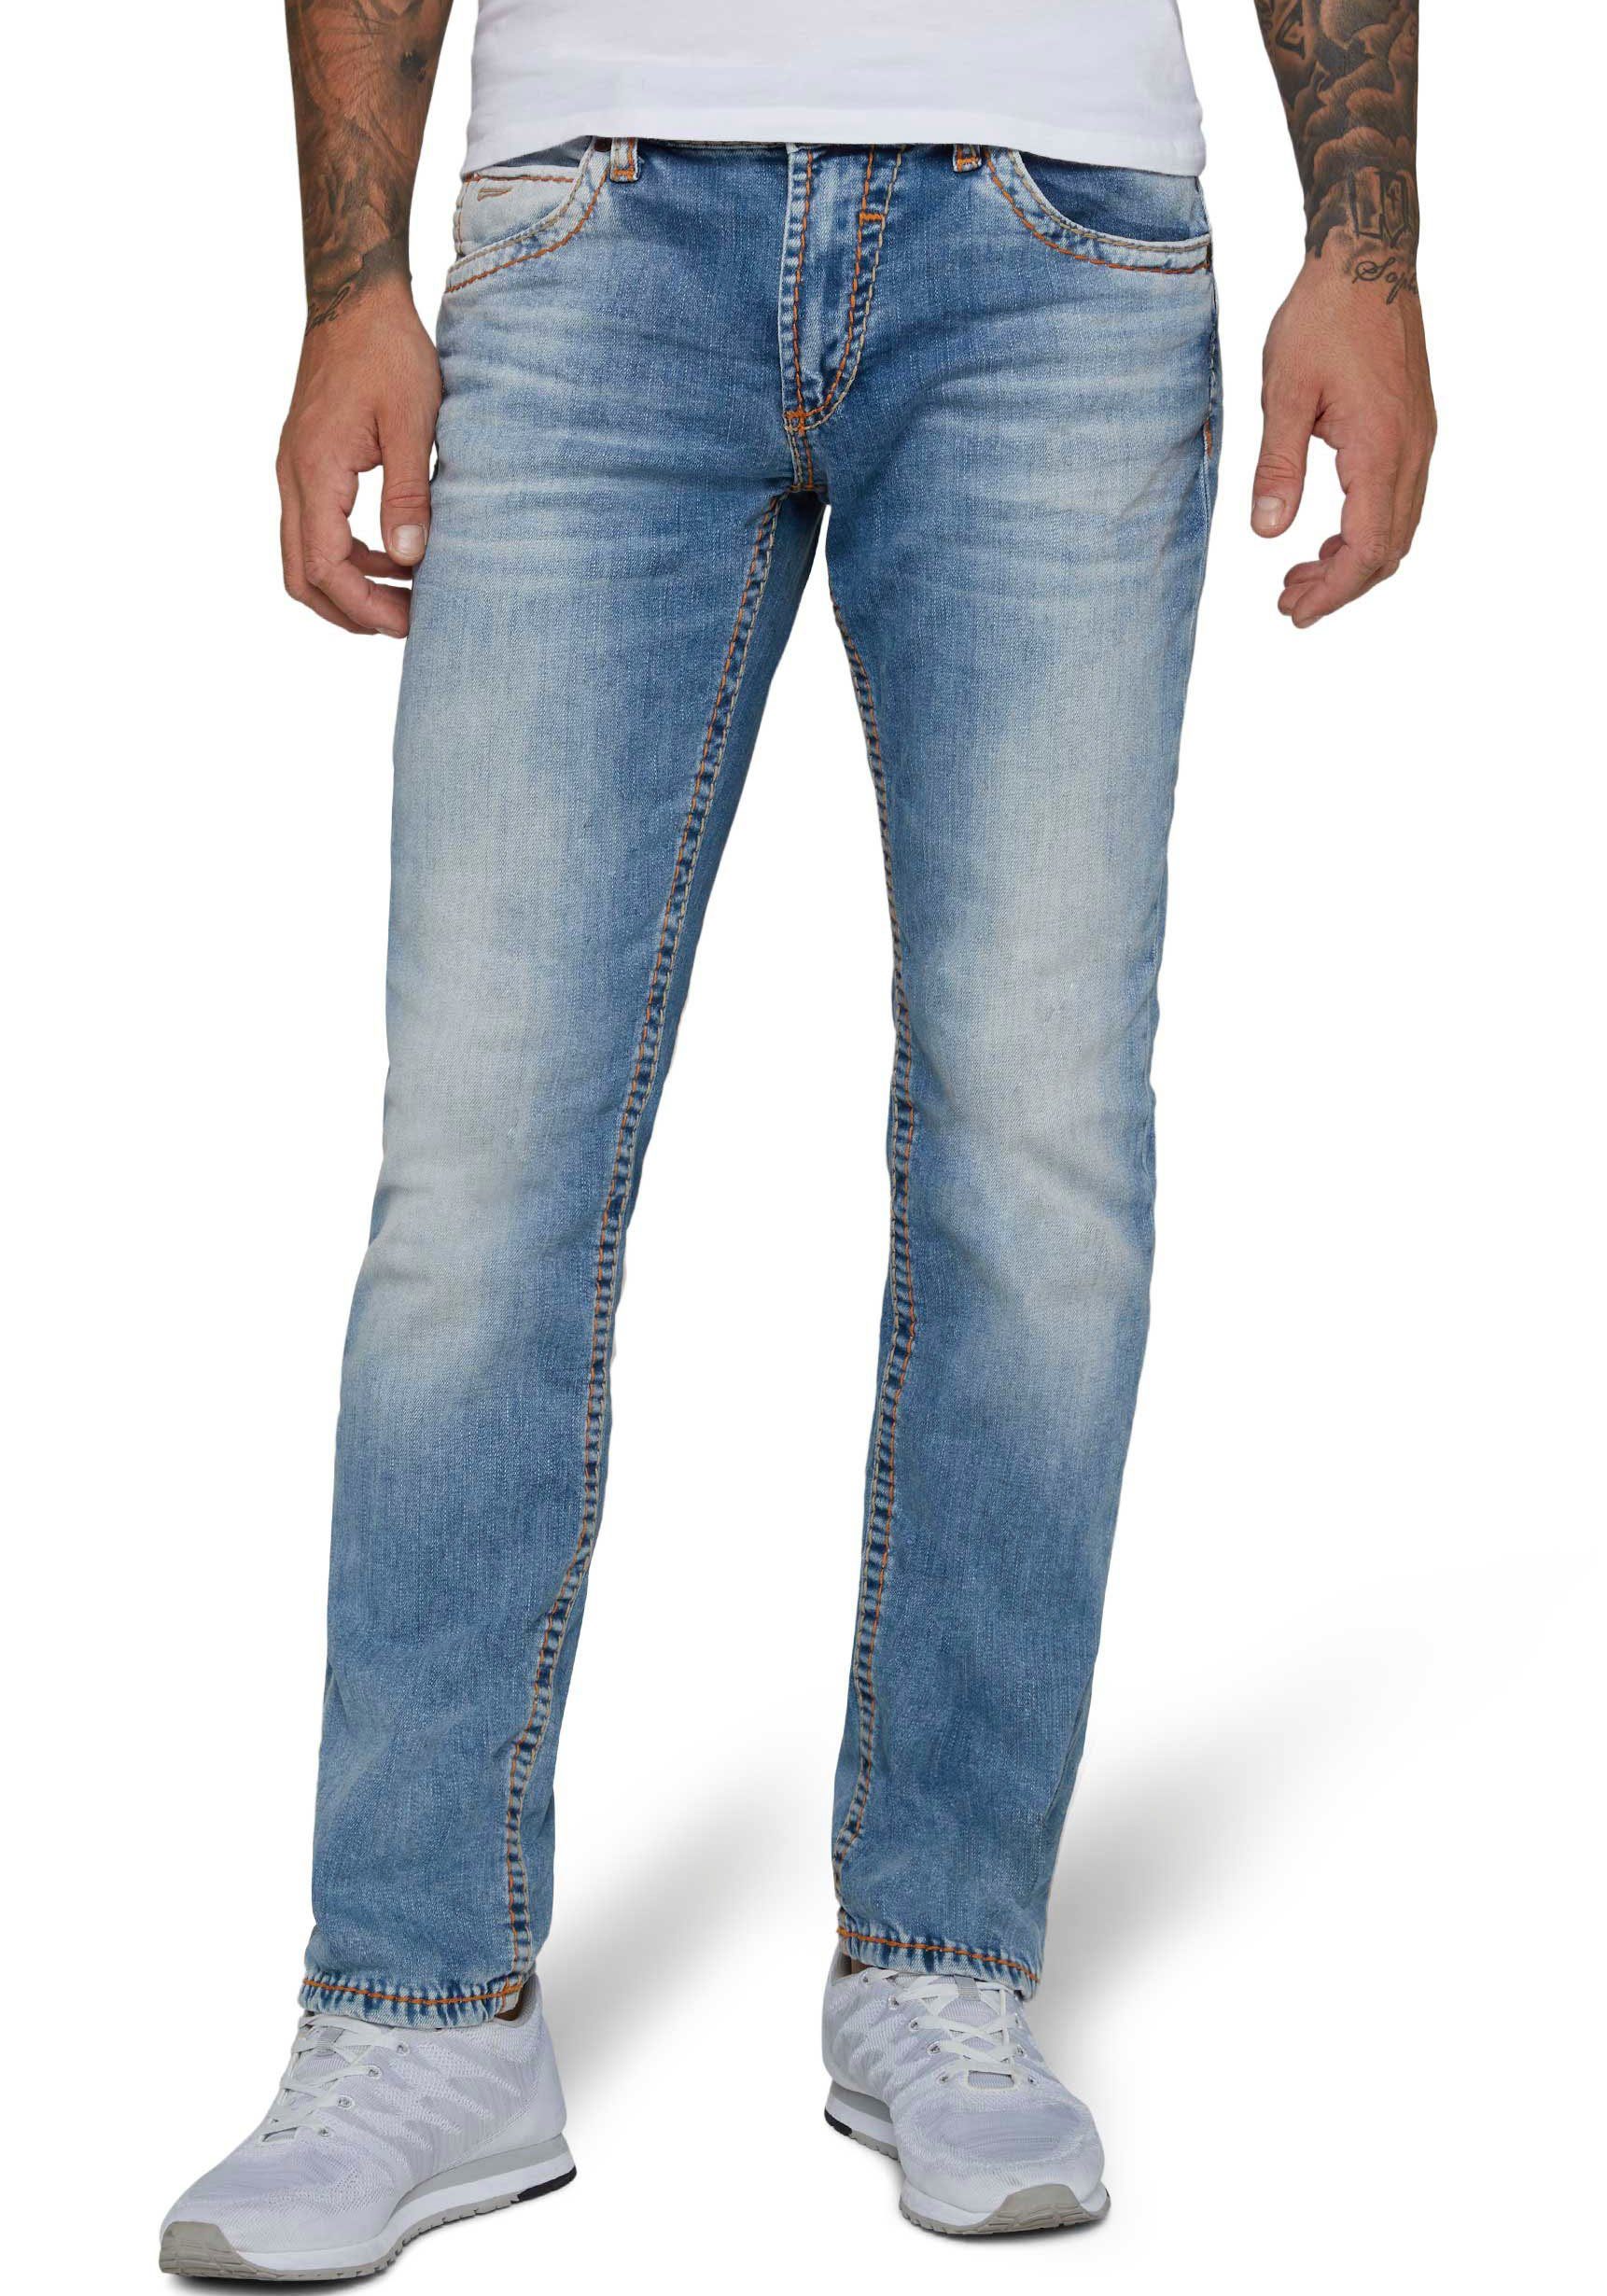 CAMP DAVID Straight-Jeans NI:CO:R611 mit markanten Steppnähten light vintage